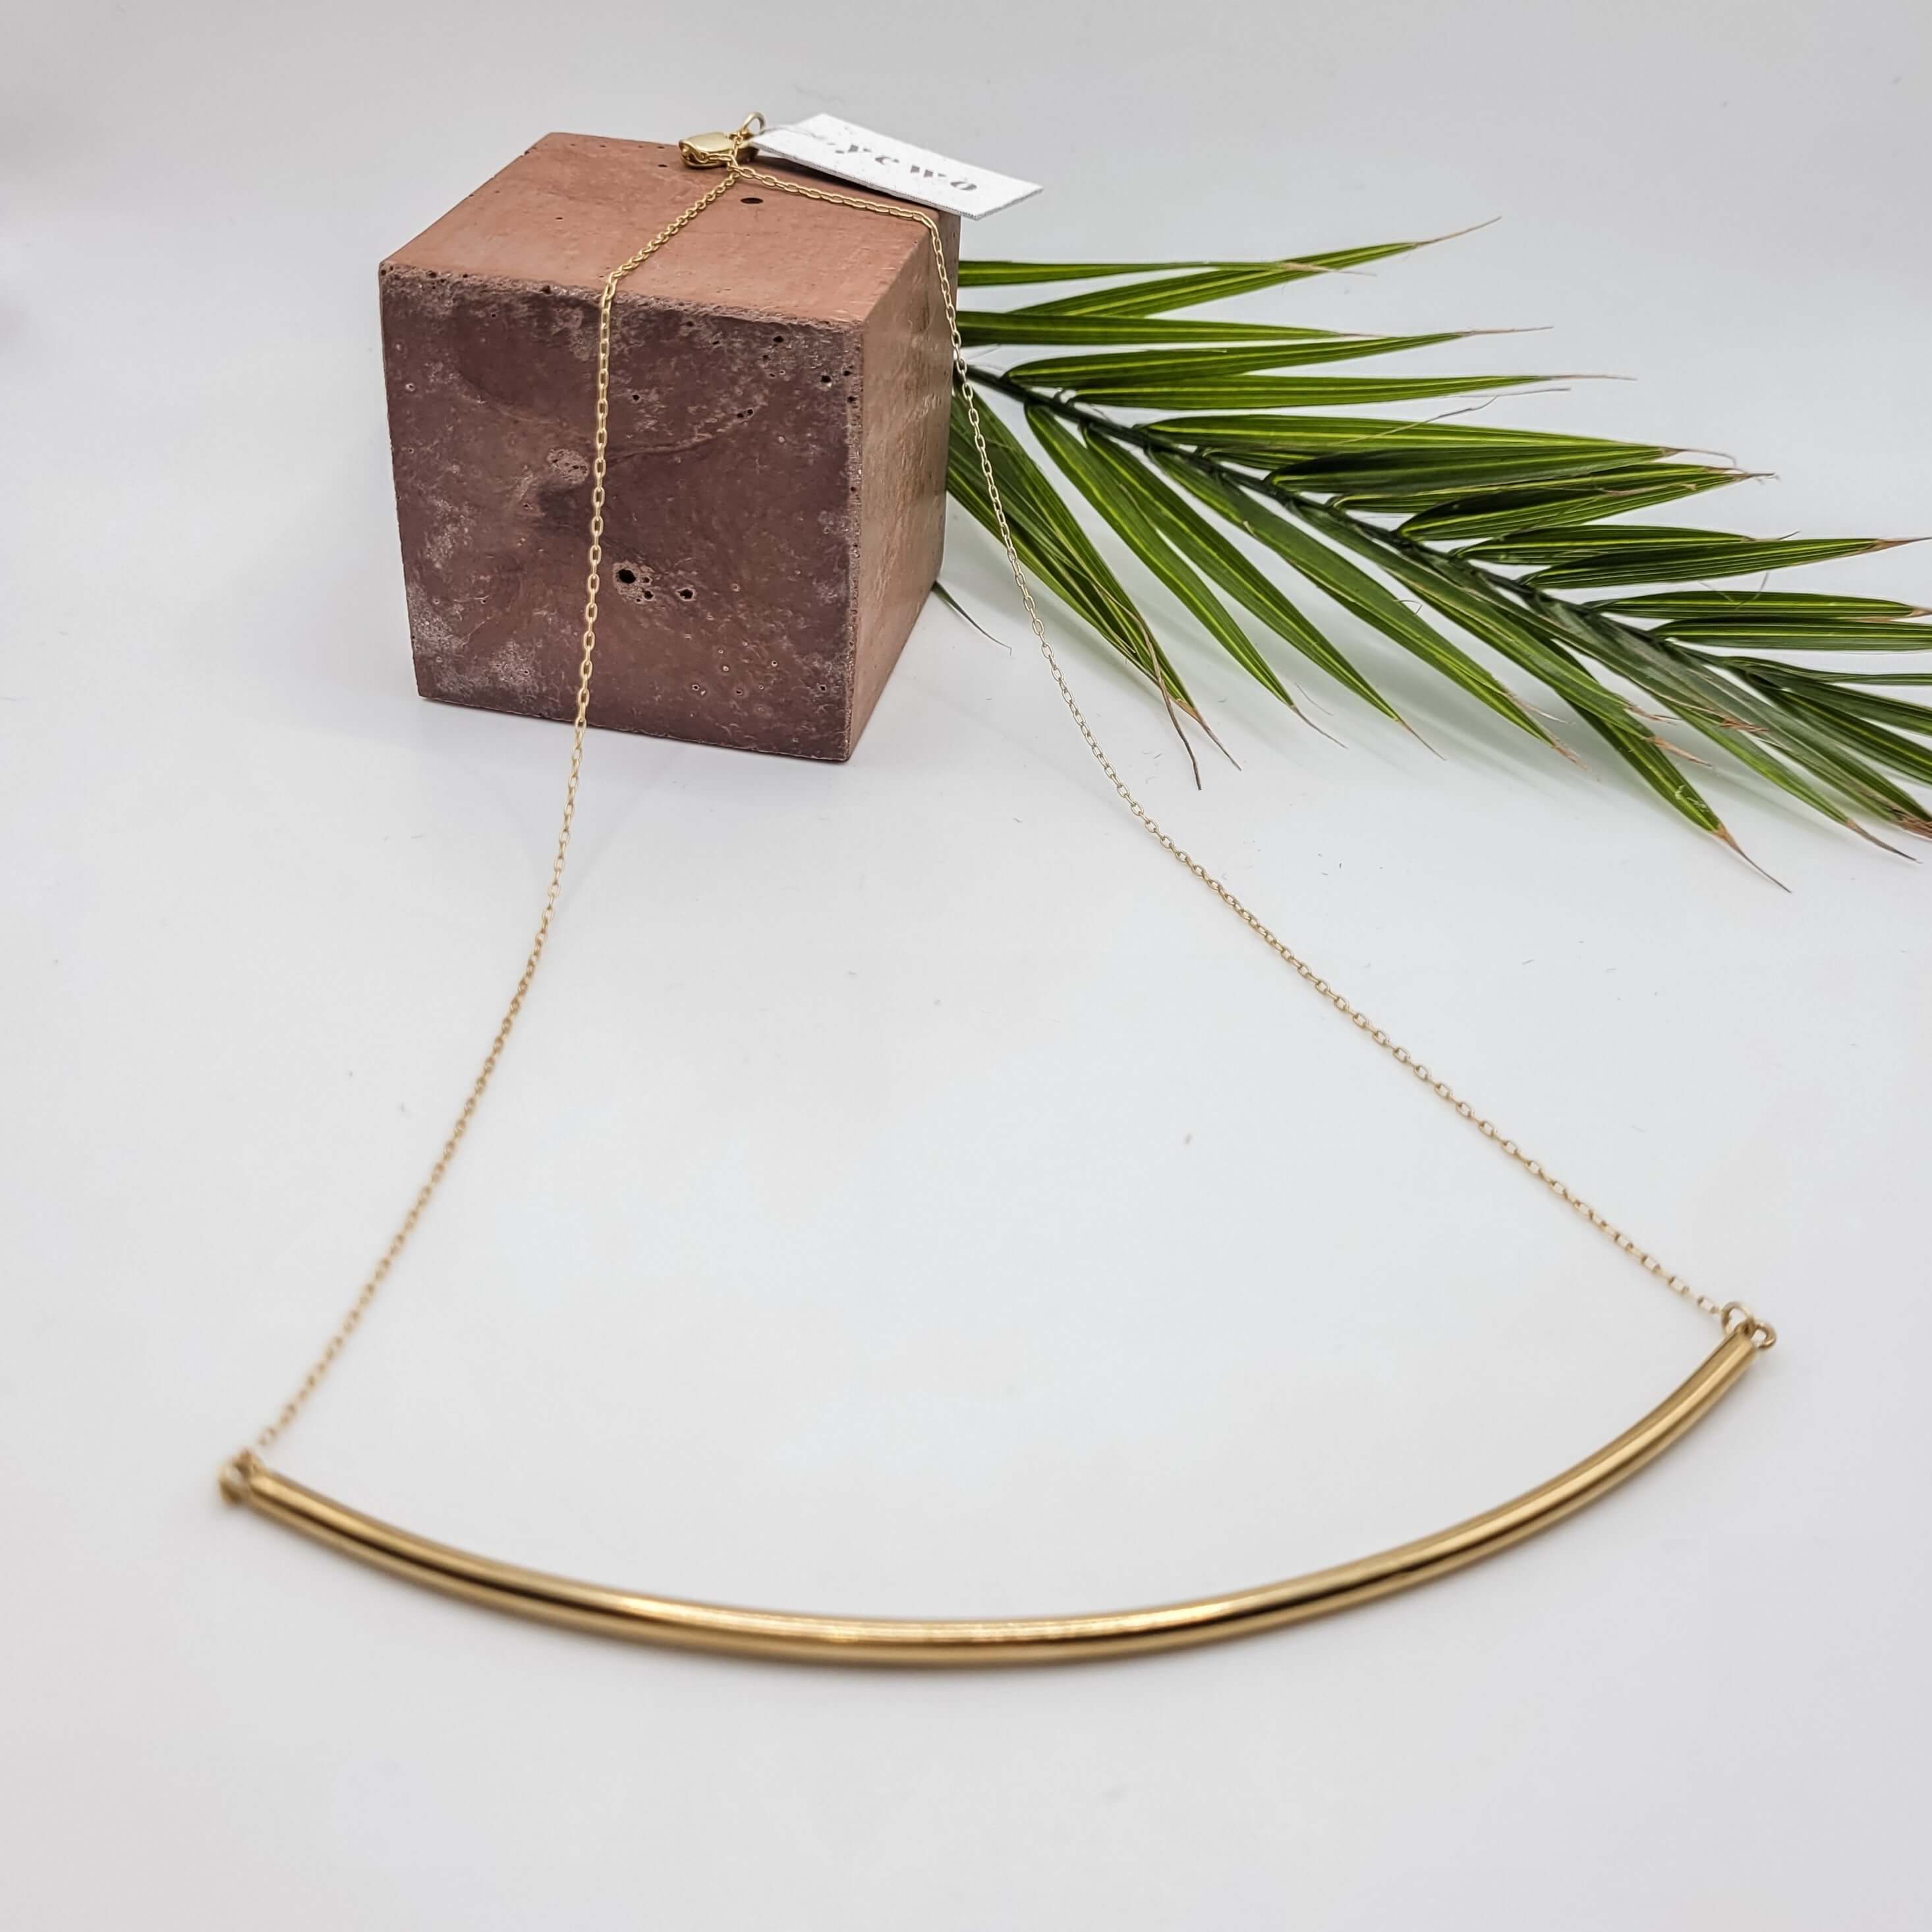 Sitima Brass Necklace with palm leaf